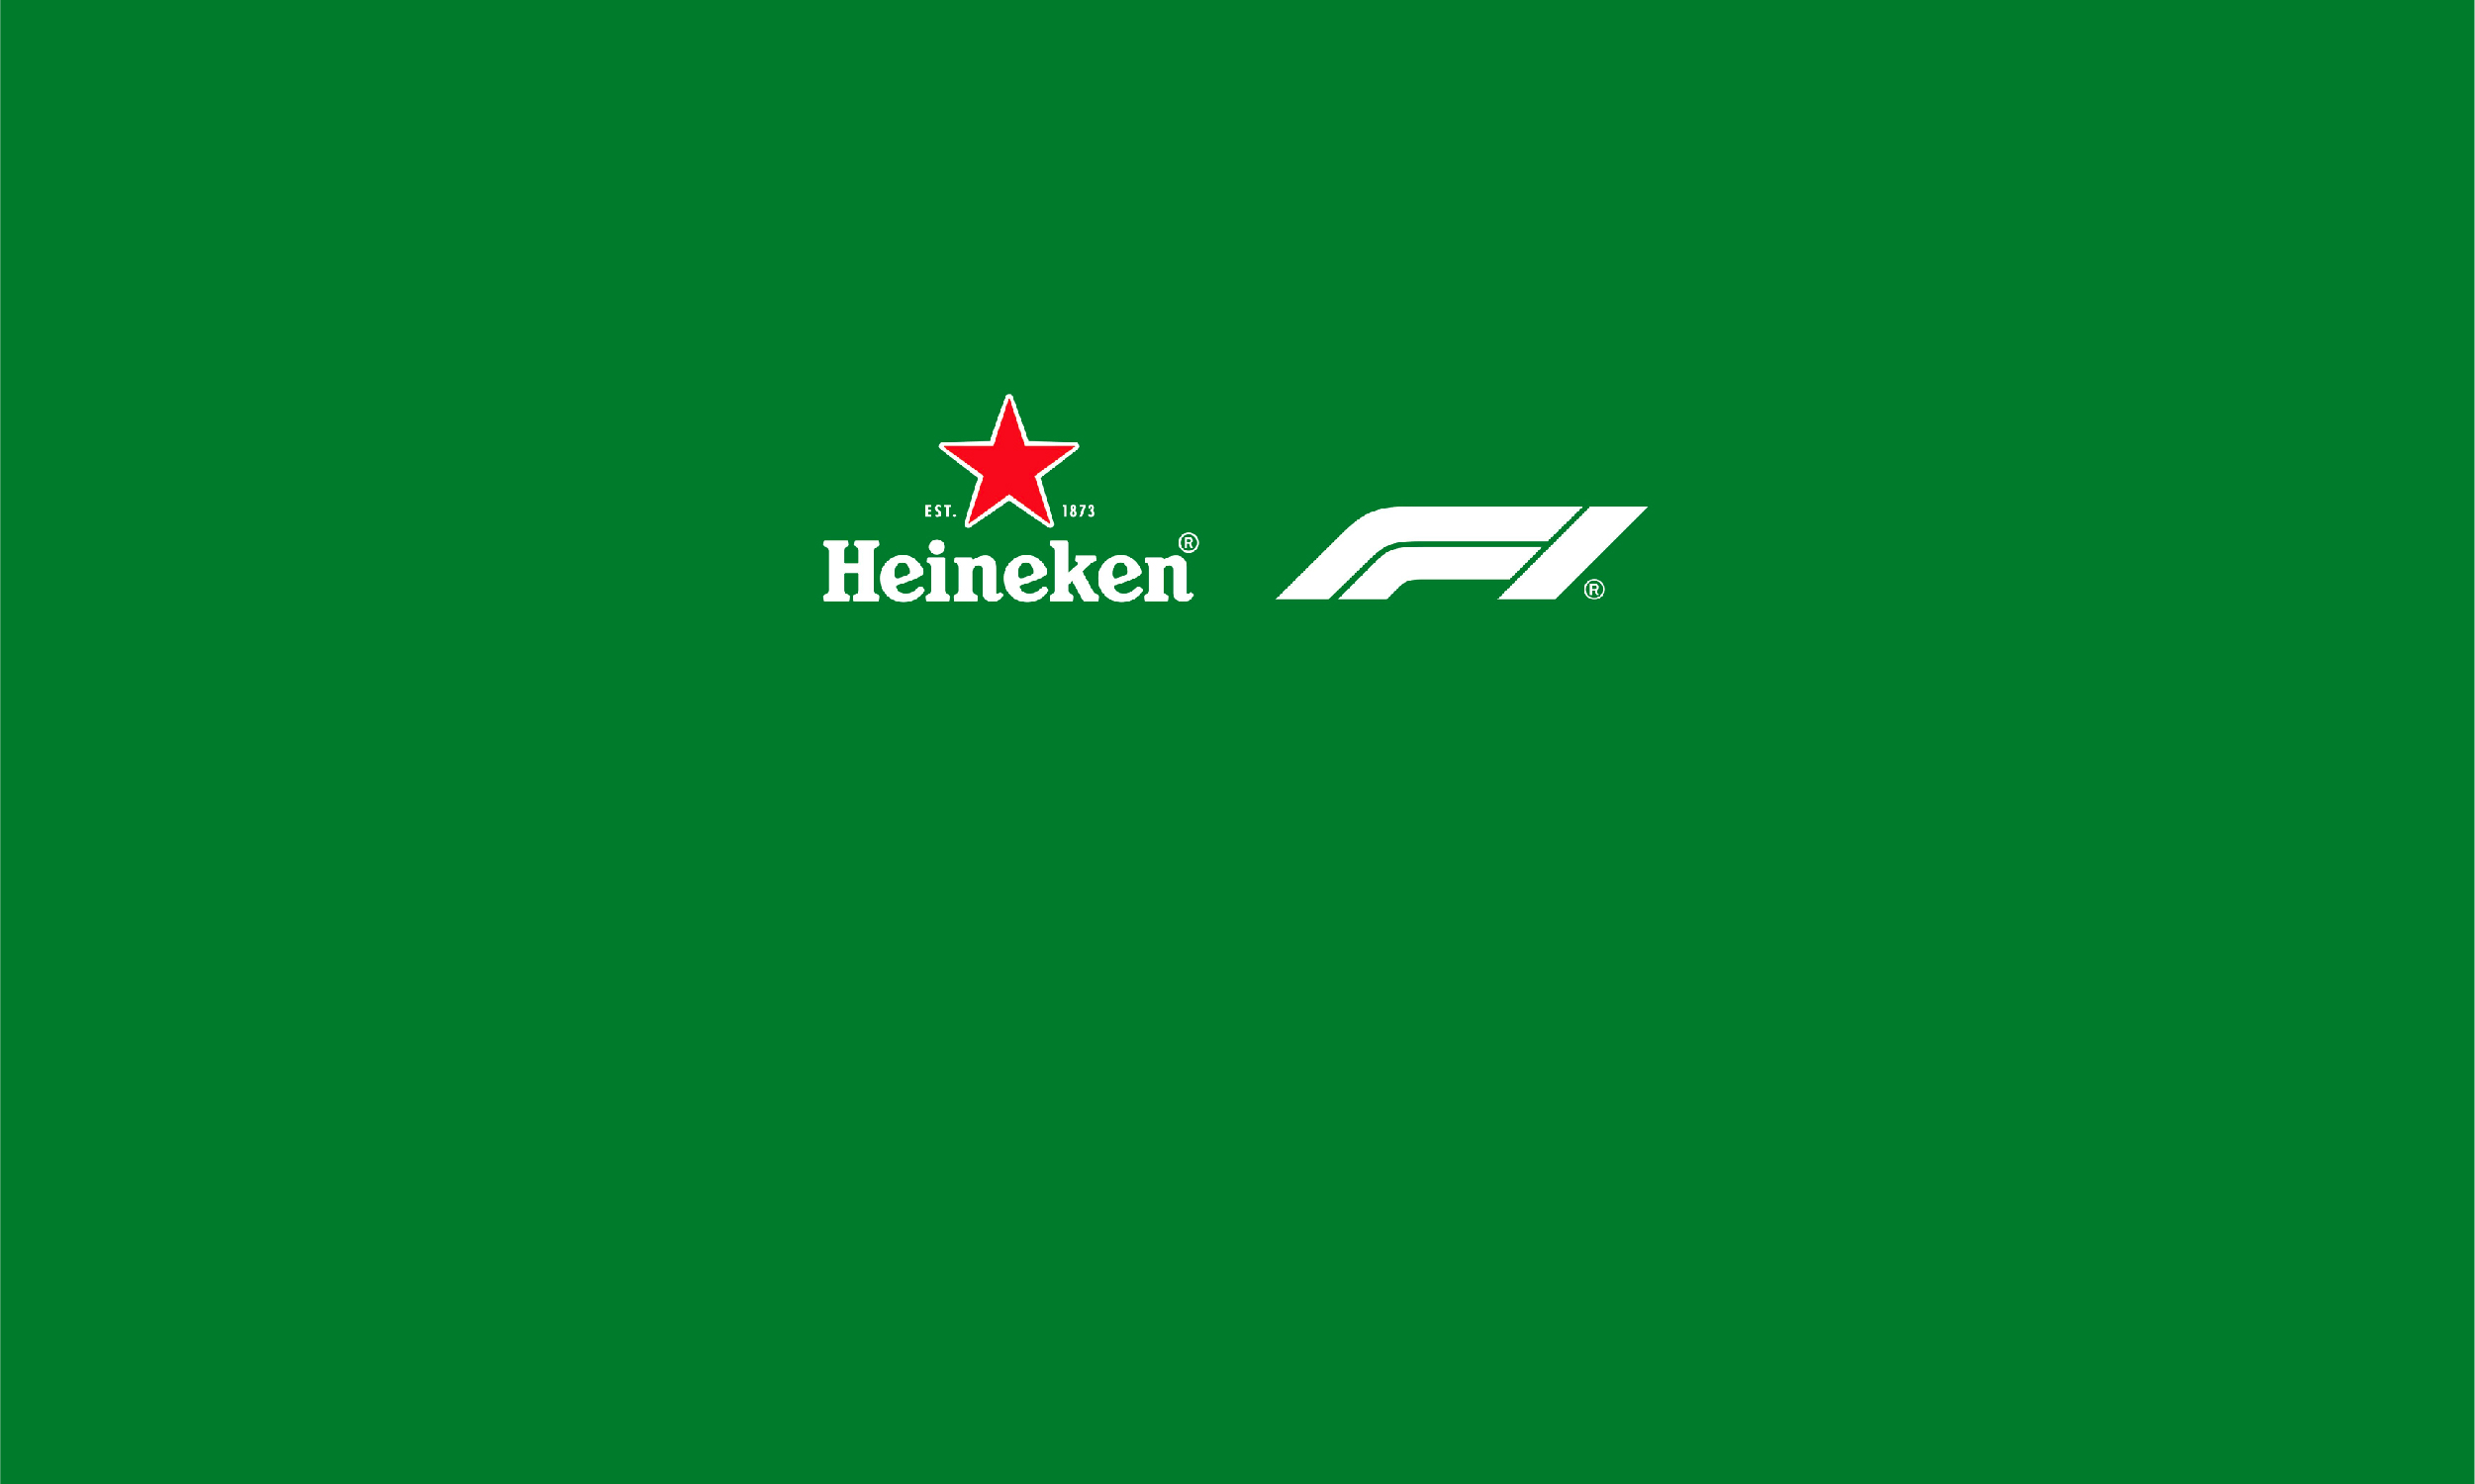 Heineken. F1 back to Portugal.